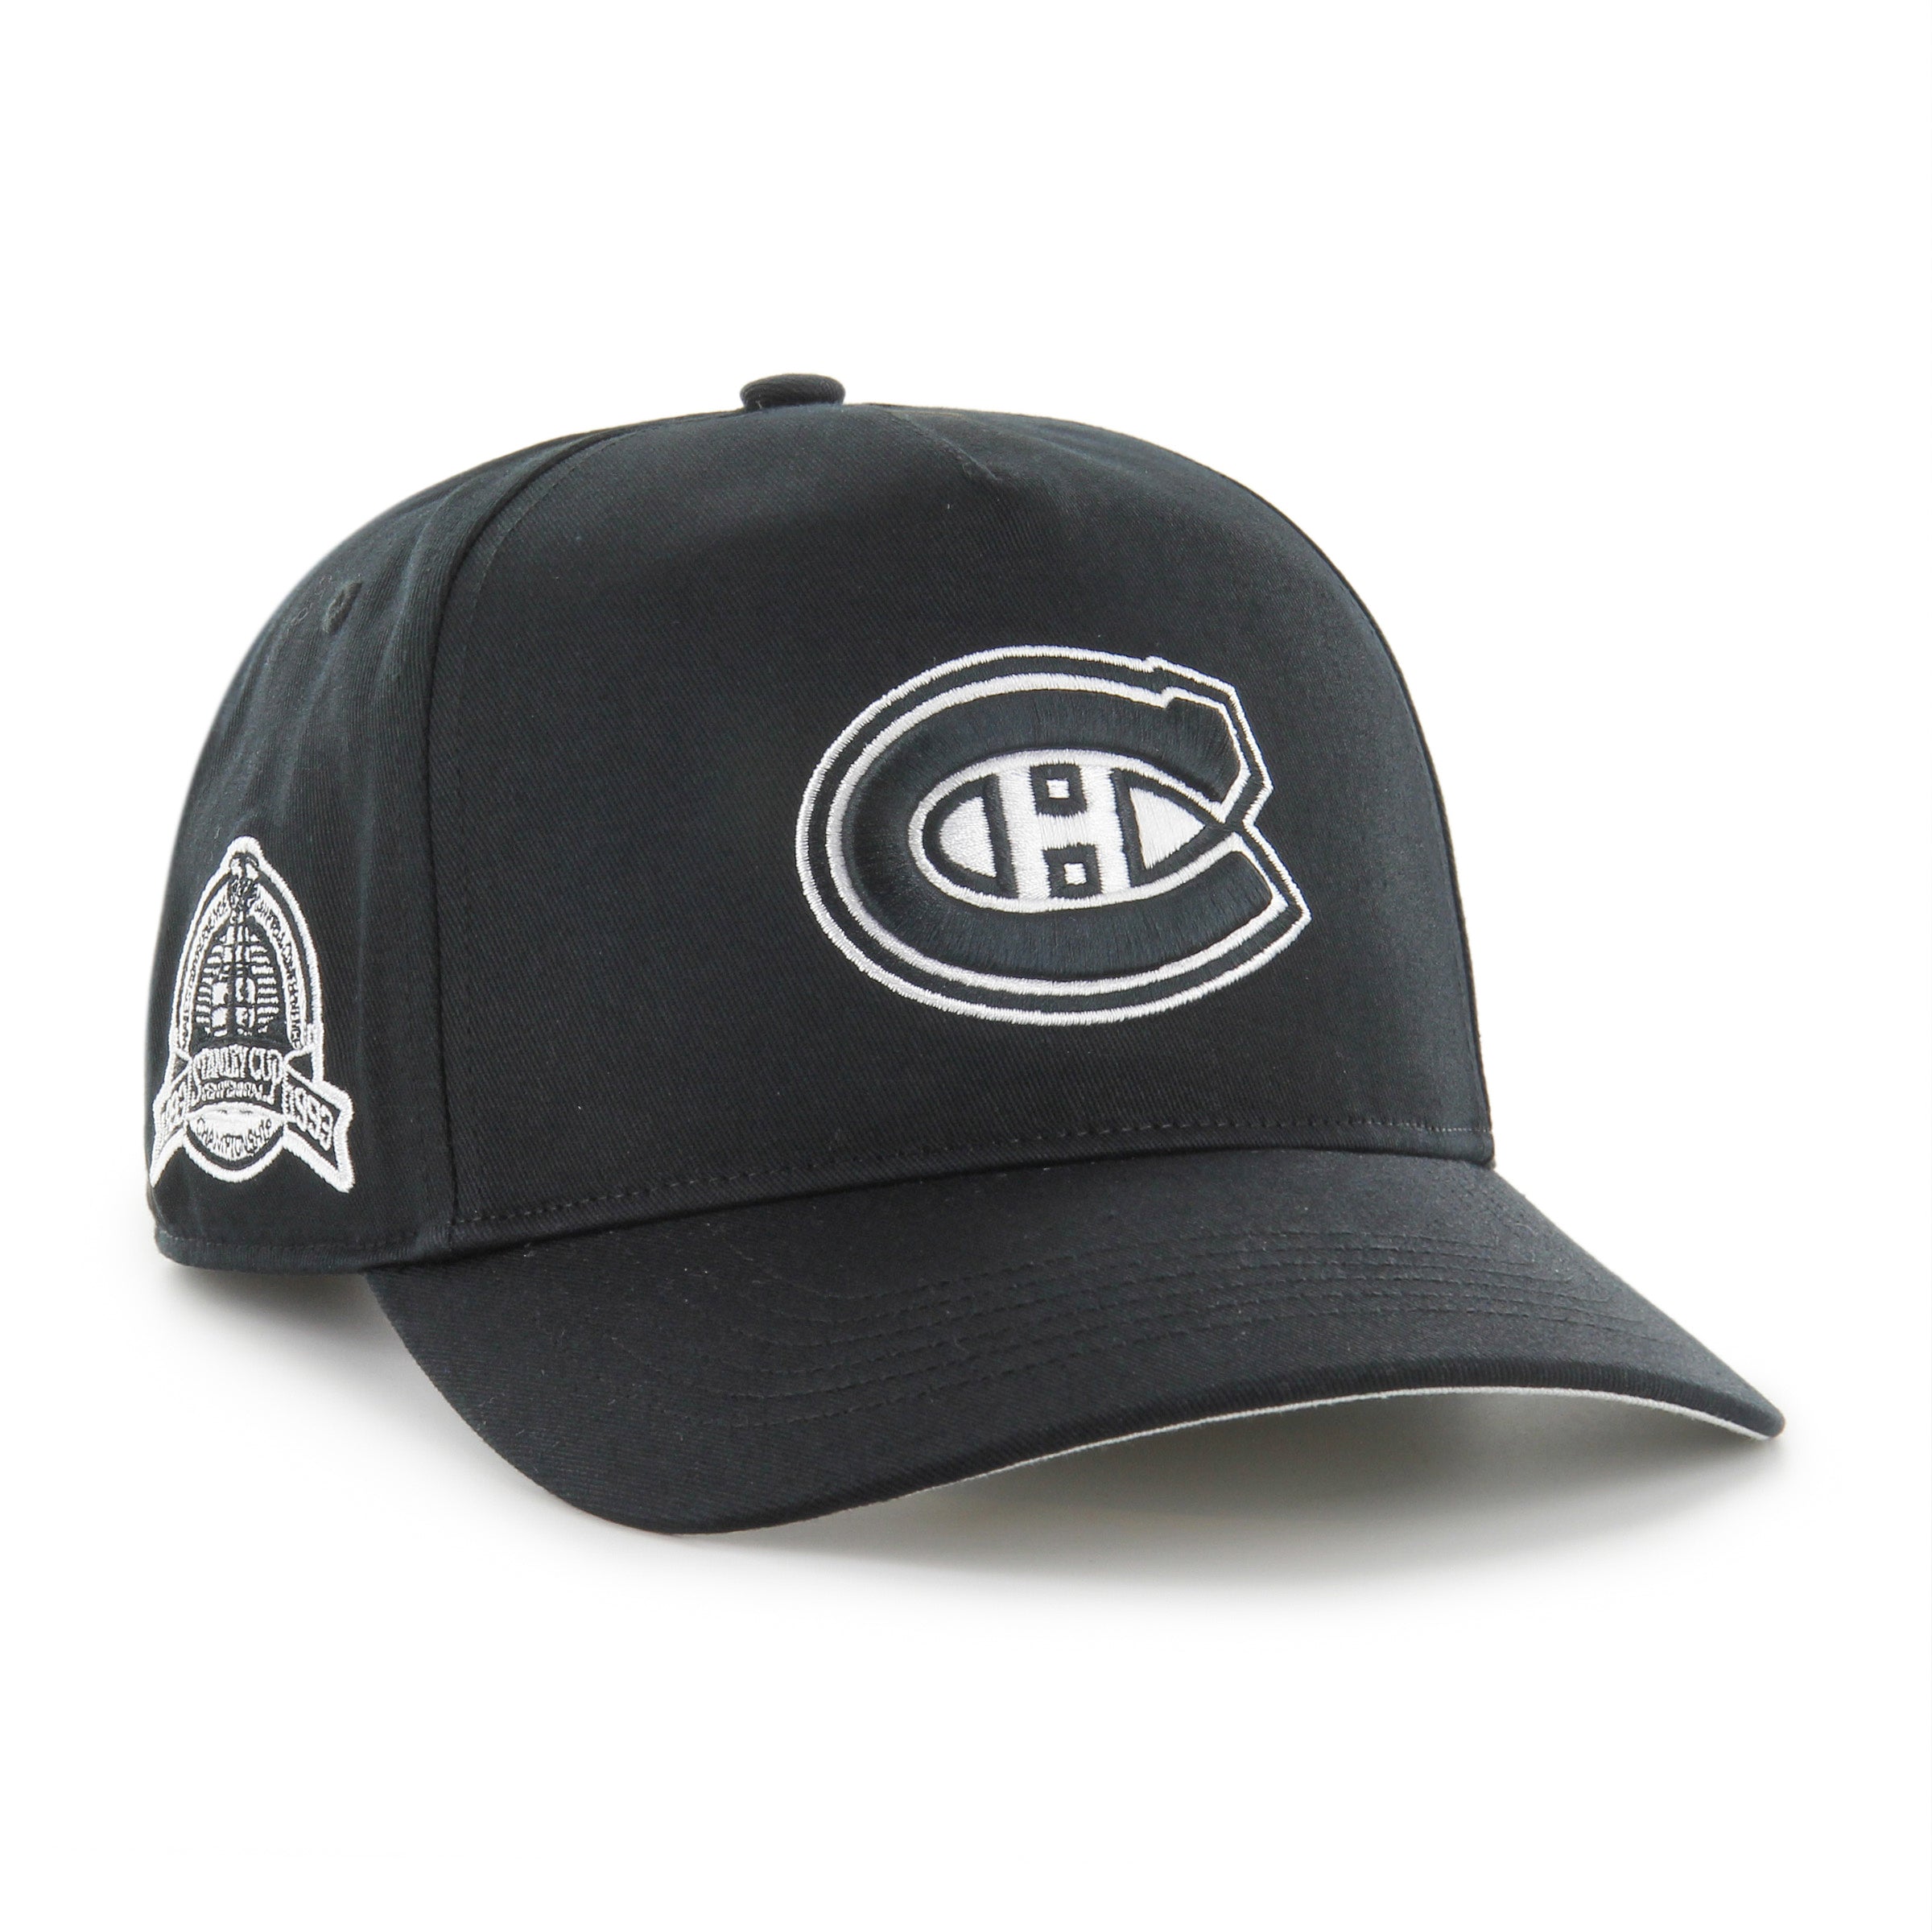 Montreal Canadiens NHL 47 Brand Men's Black & White Sure Shot Hitch Adjustable Hat